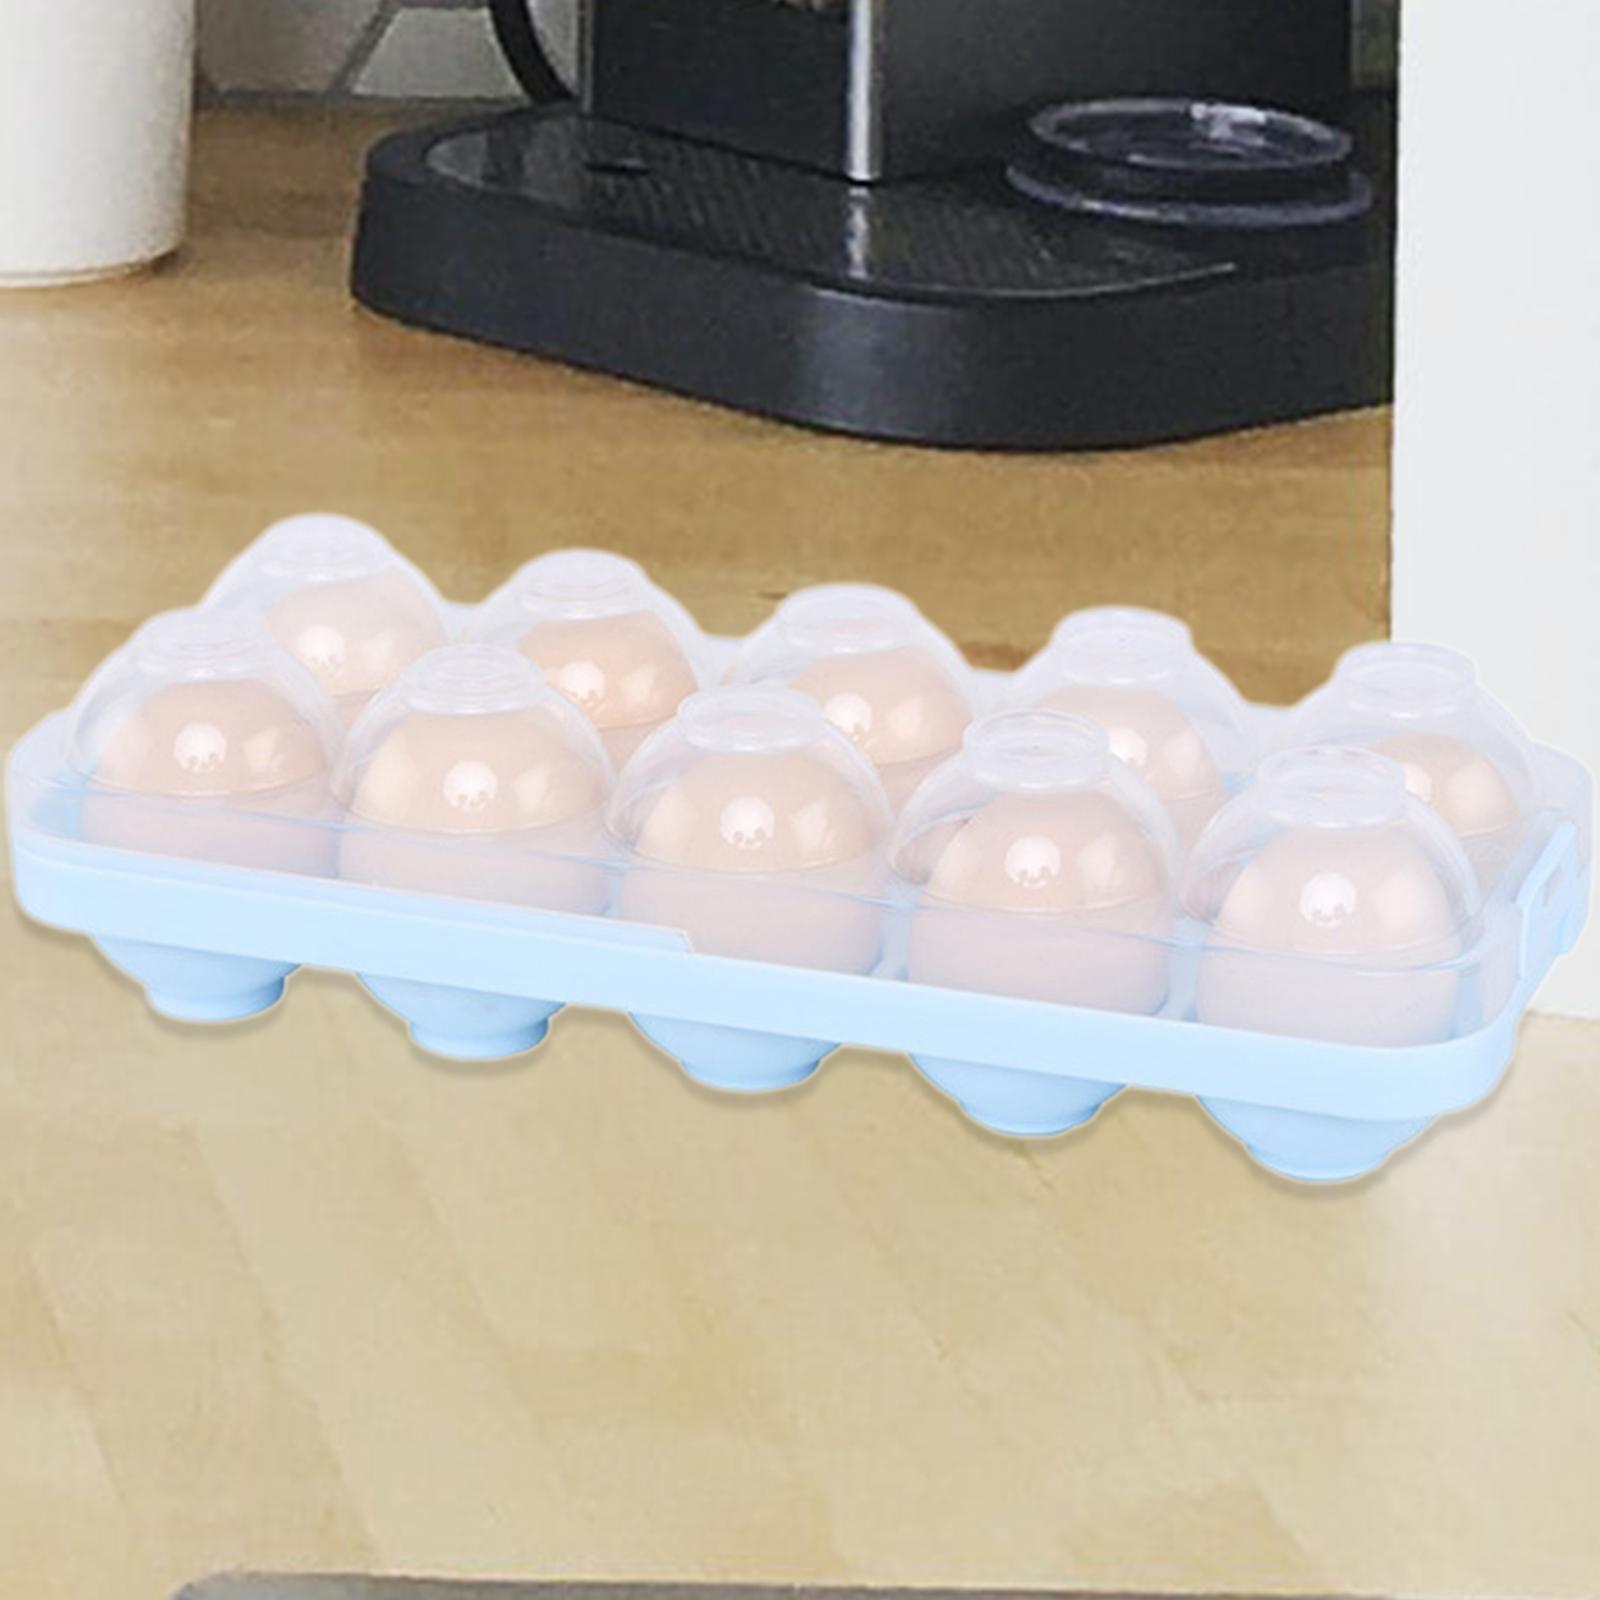 Eggs Tray Holder Crisper Organizer Container for Fridge Refrigerator Kitchen